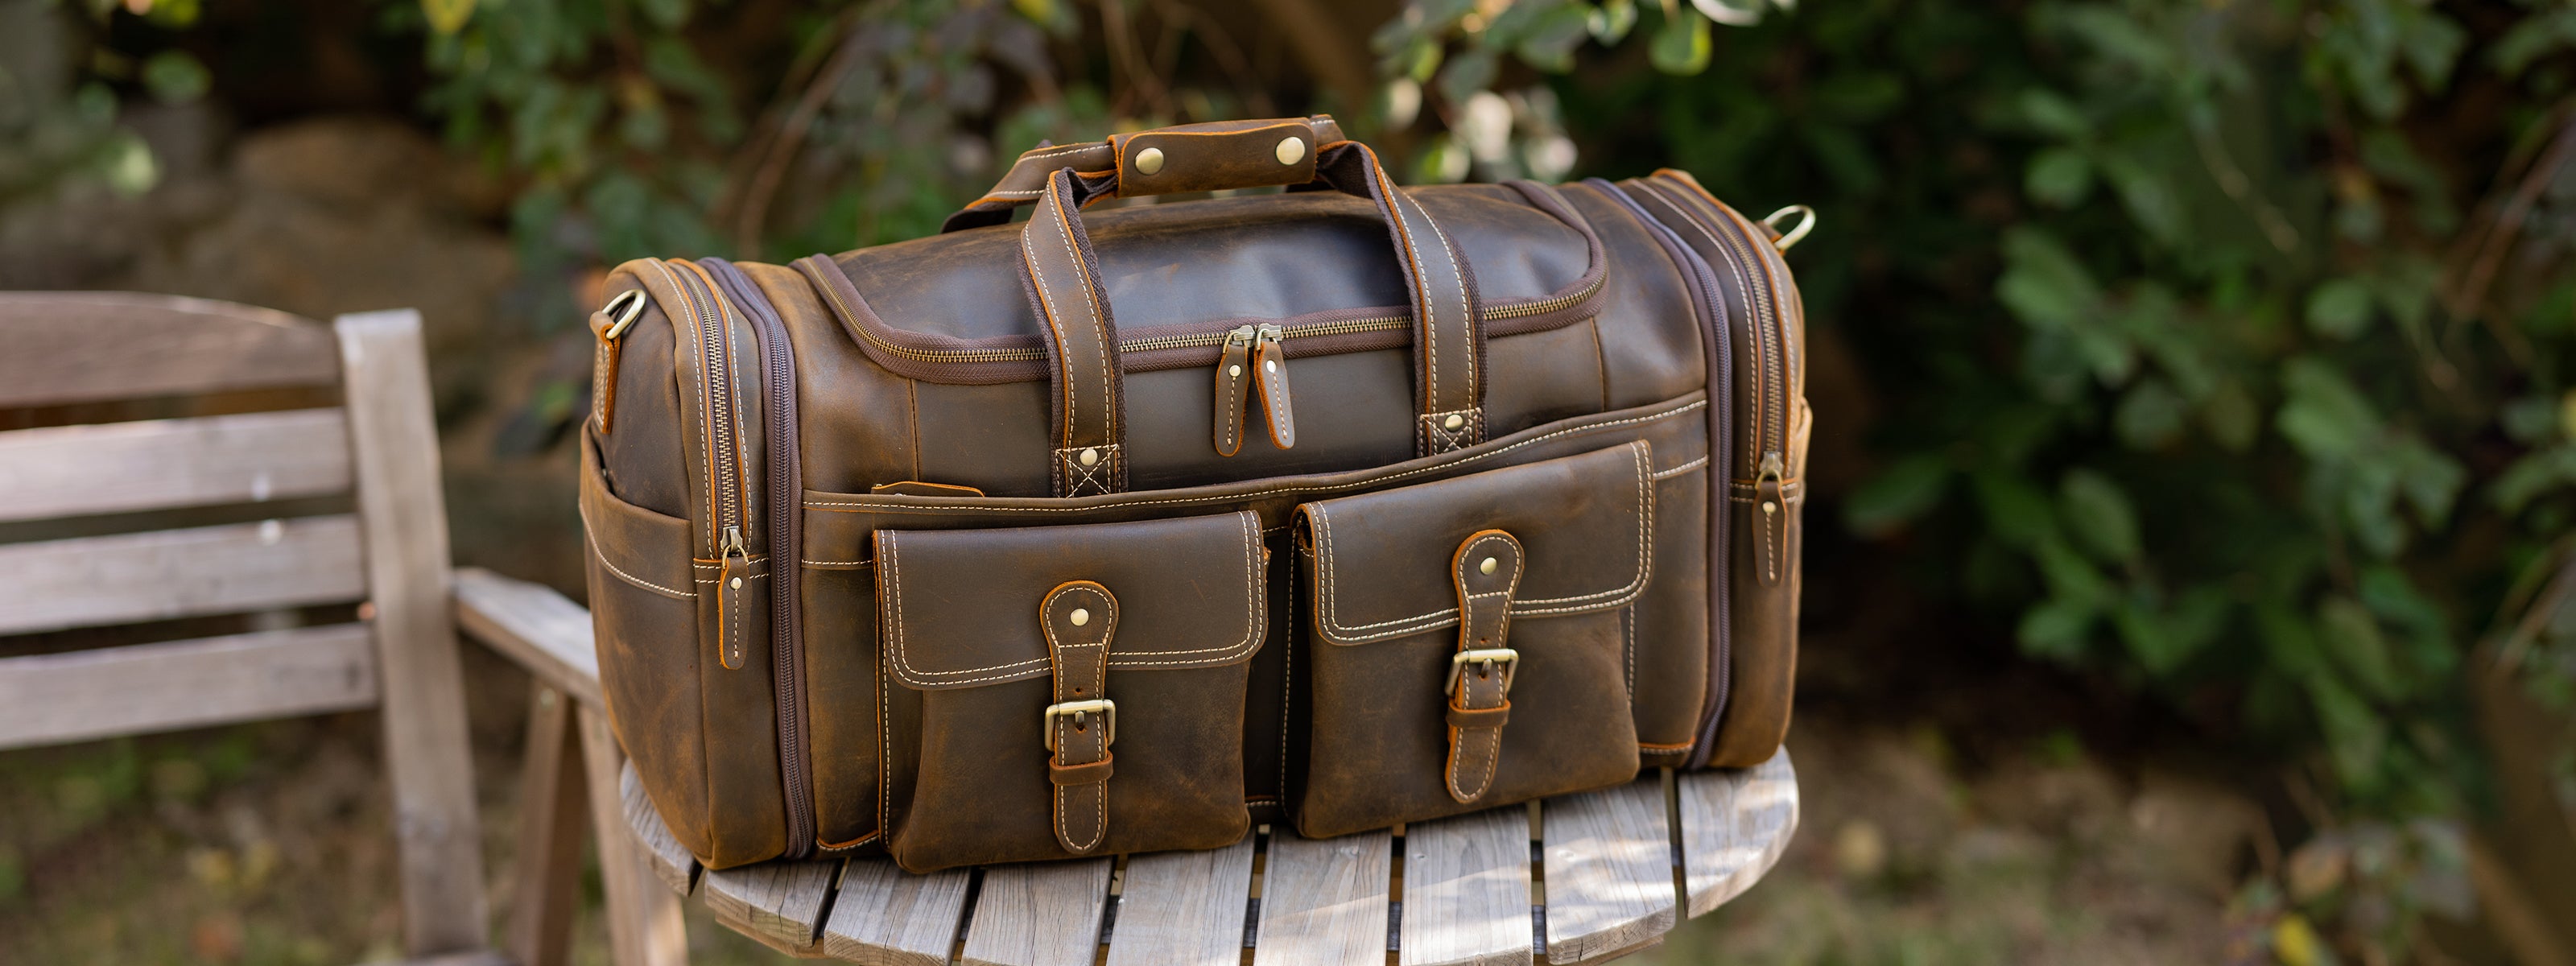 Fashion Luxury Designer Laptop Handbag Leather Brief Case for Men